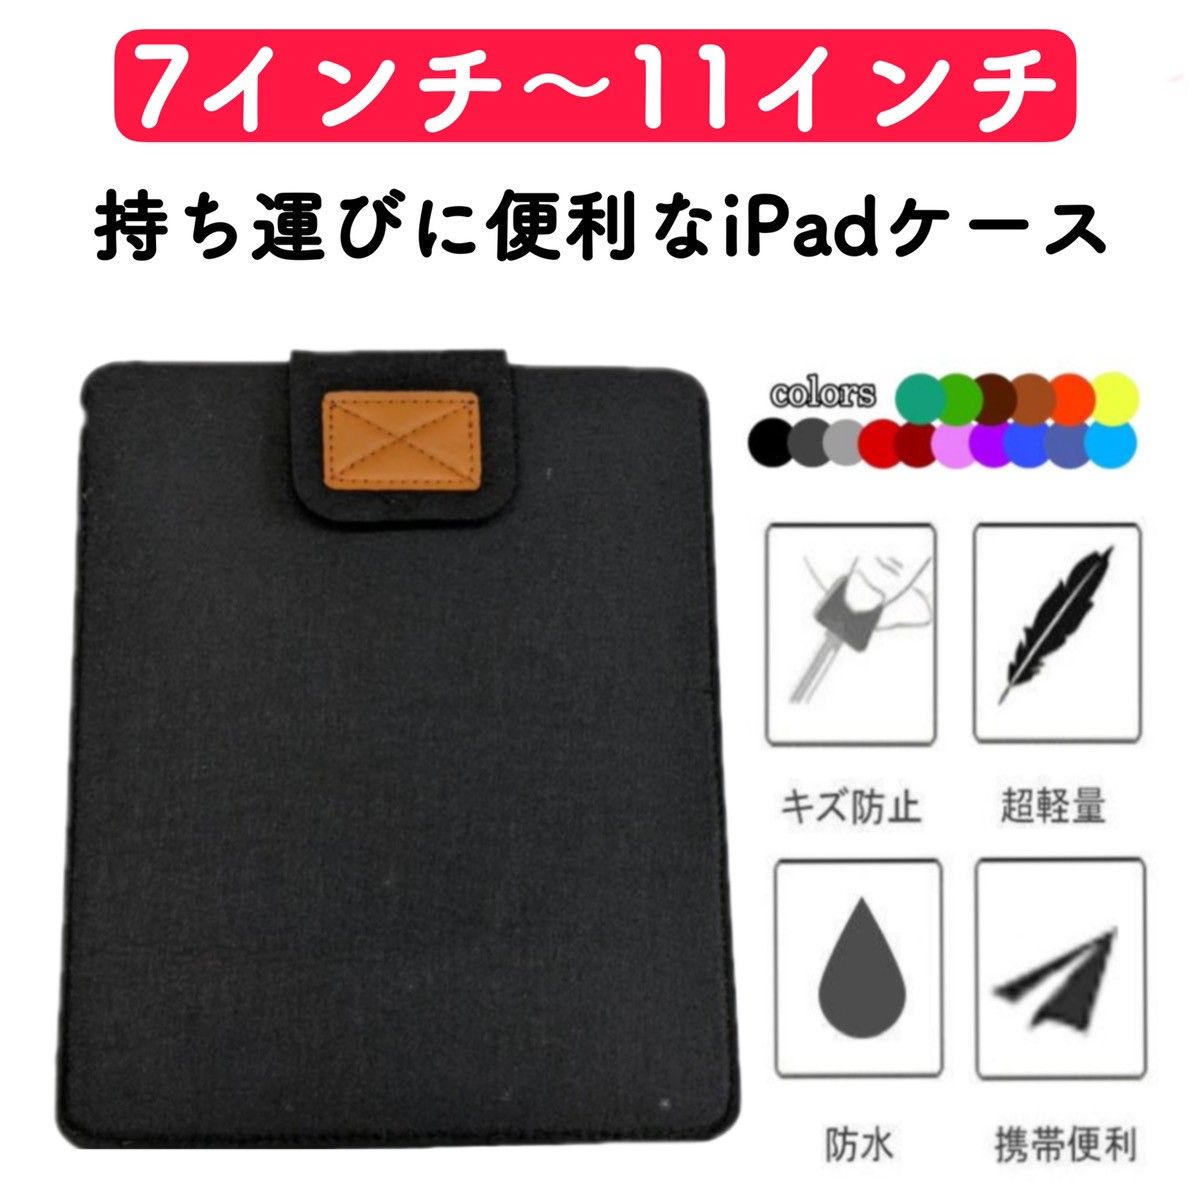 iPadケース タブレットケース 11インチまで対応 フェルト 薄型 通学用 収納 カバー 軽量 保護カバー 激安 キッズ 